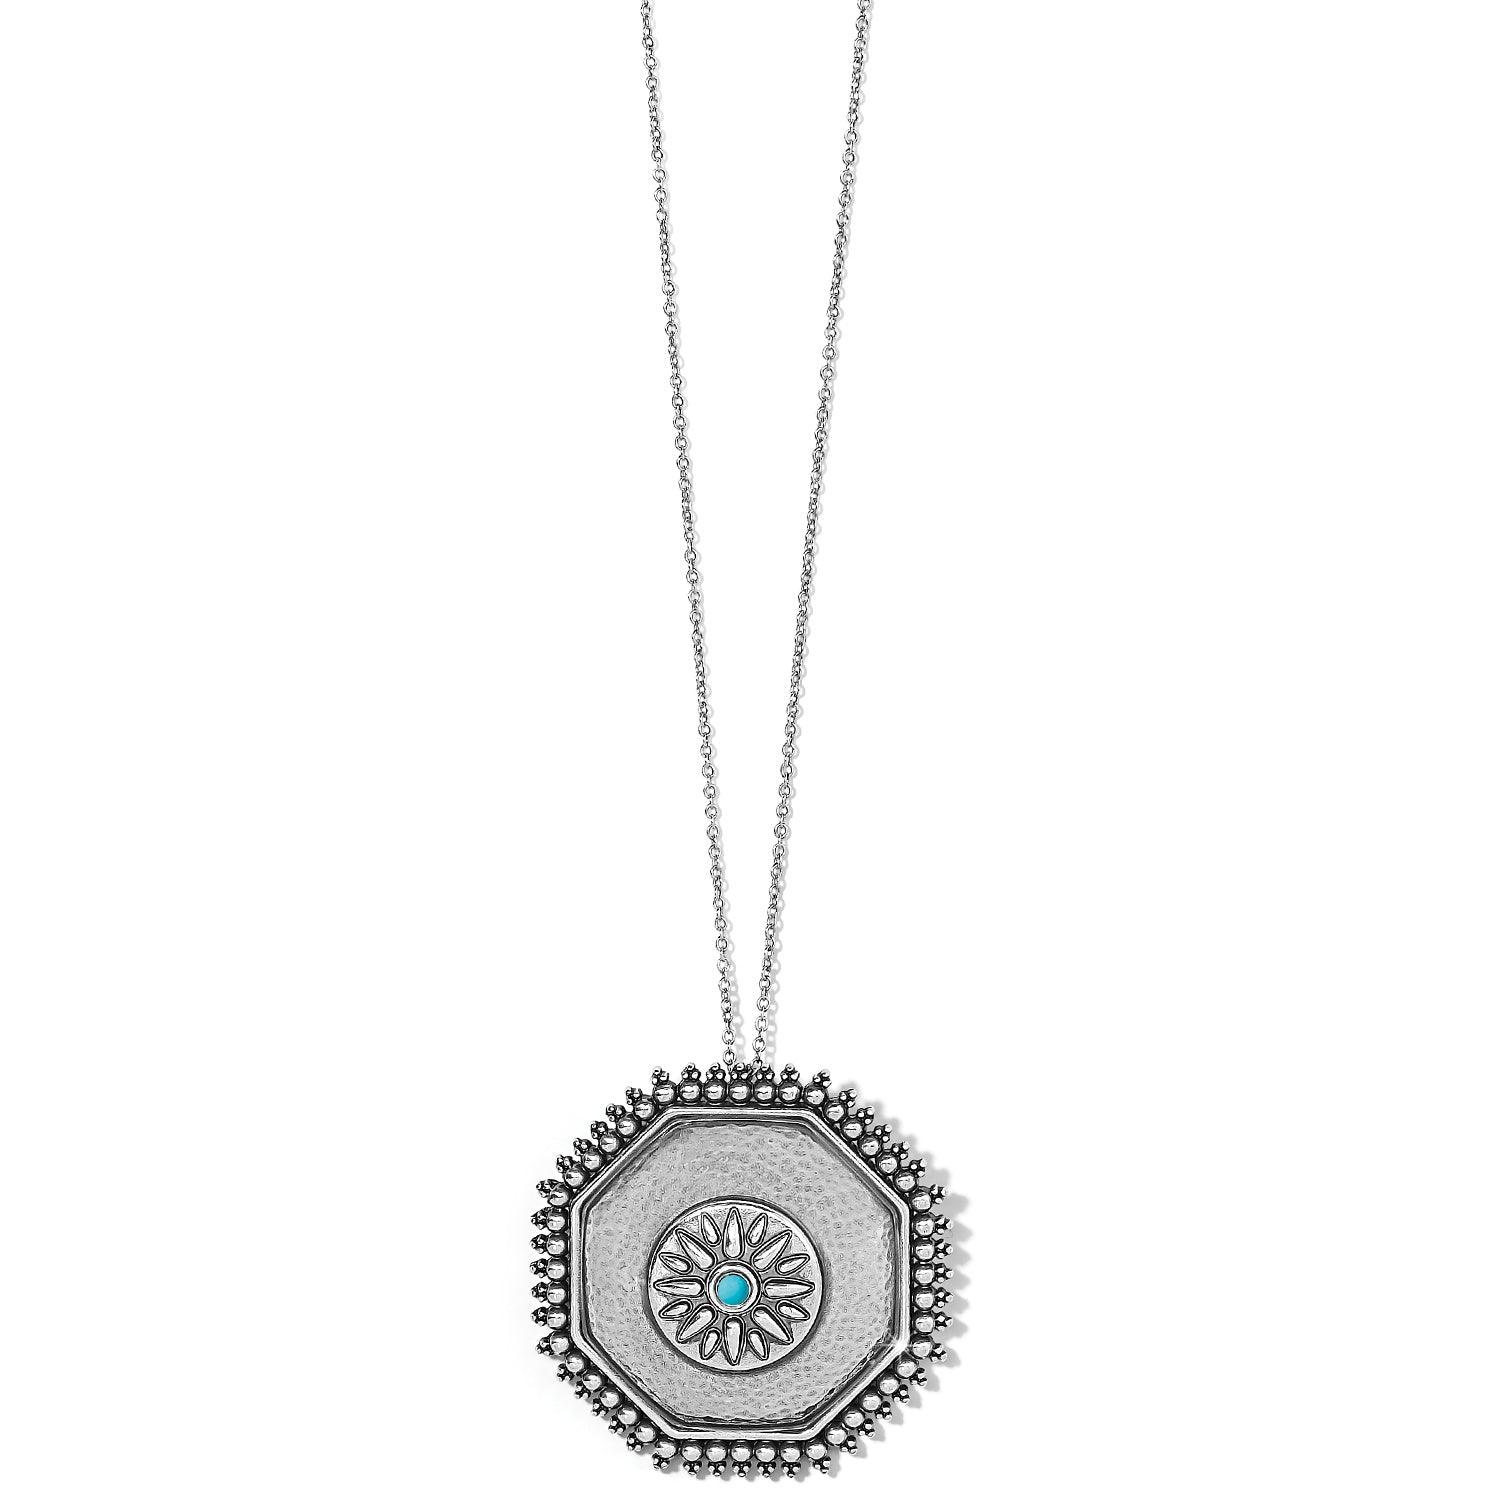 Telluride West Pendant Necklace - The Silver Dahlia